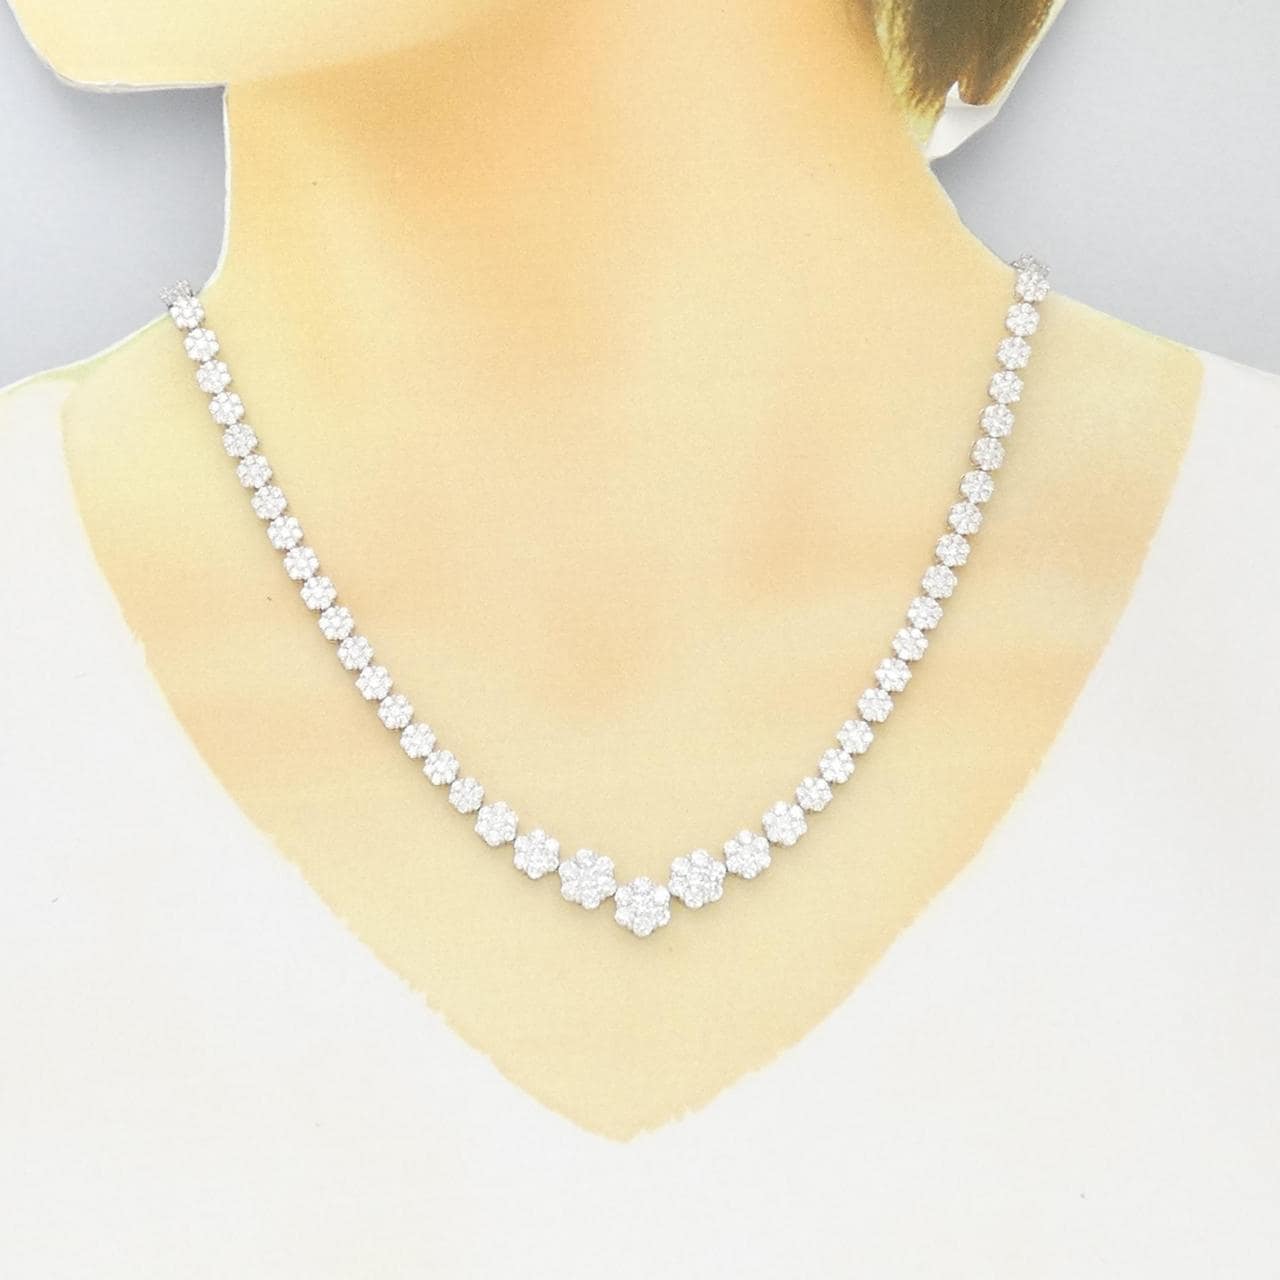 K18WG Flower Diamond Necklace 12.202CT